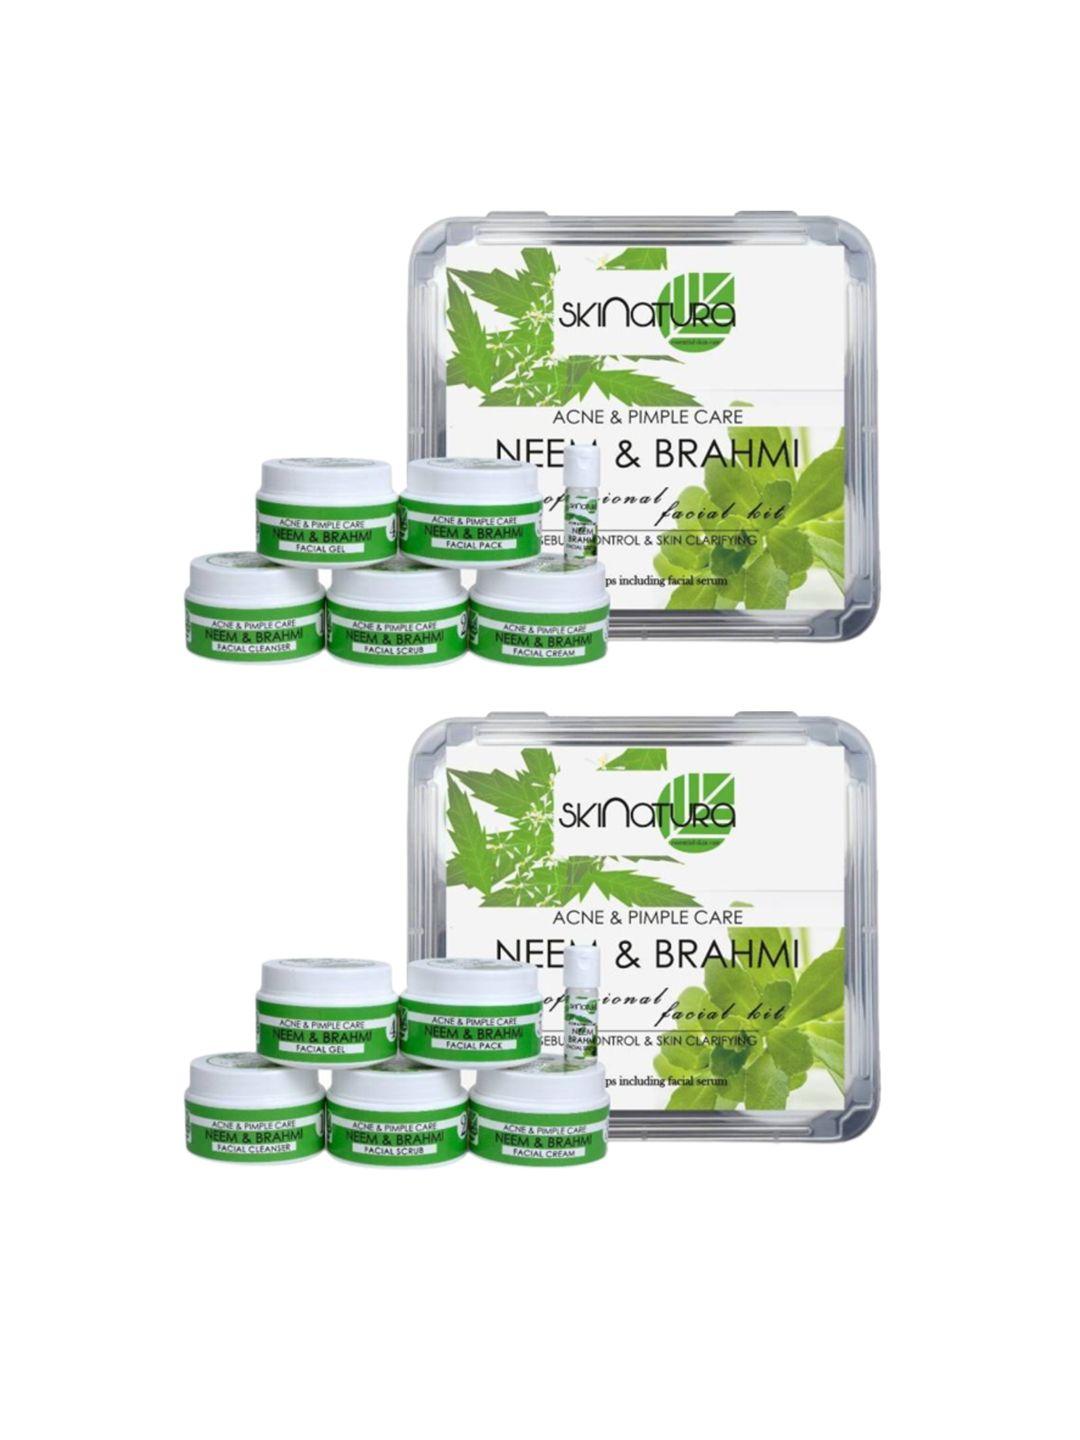 skinatura adults set of 2 neem & brahmi professional facial kit 310 gm each